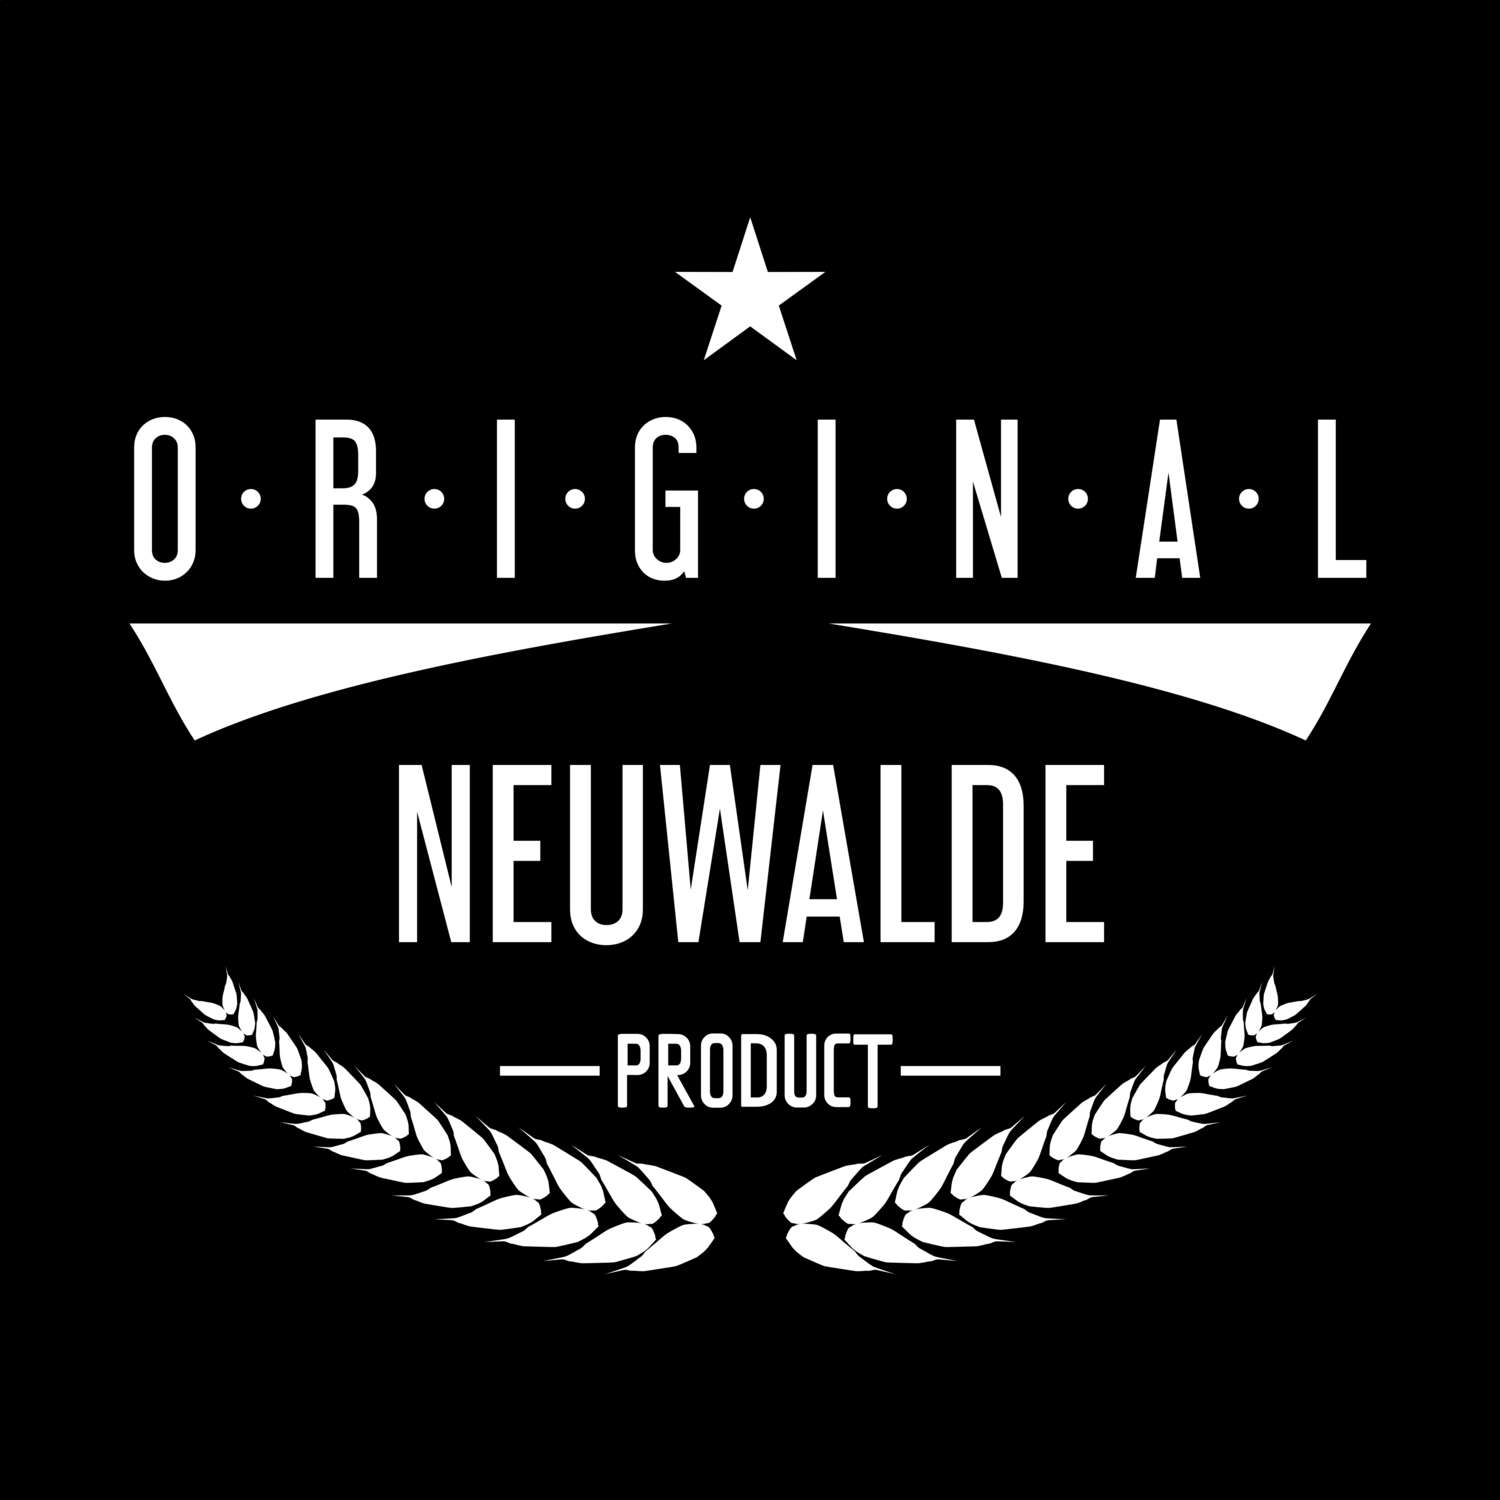 Neuwalde T-Shirt »Original Product«